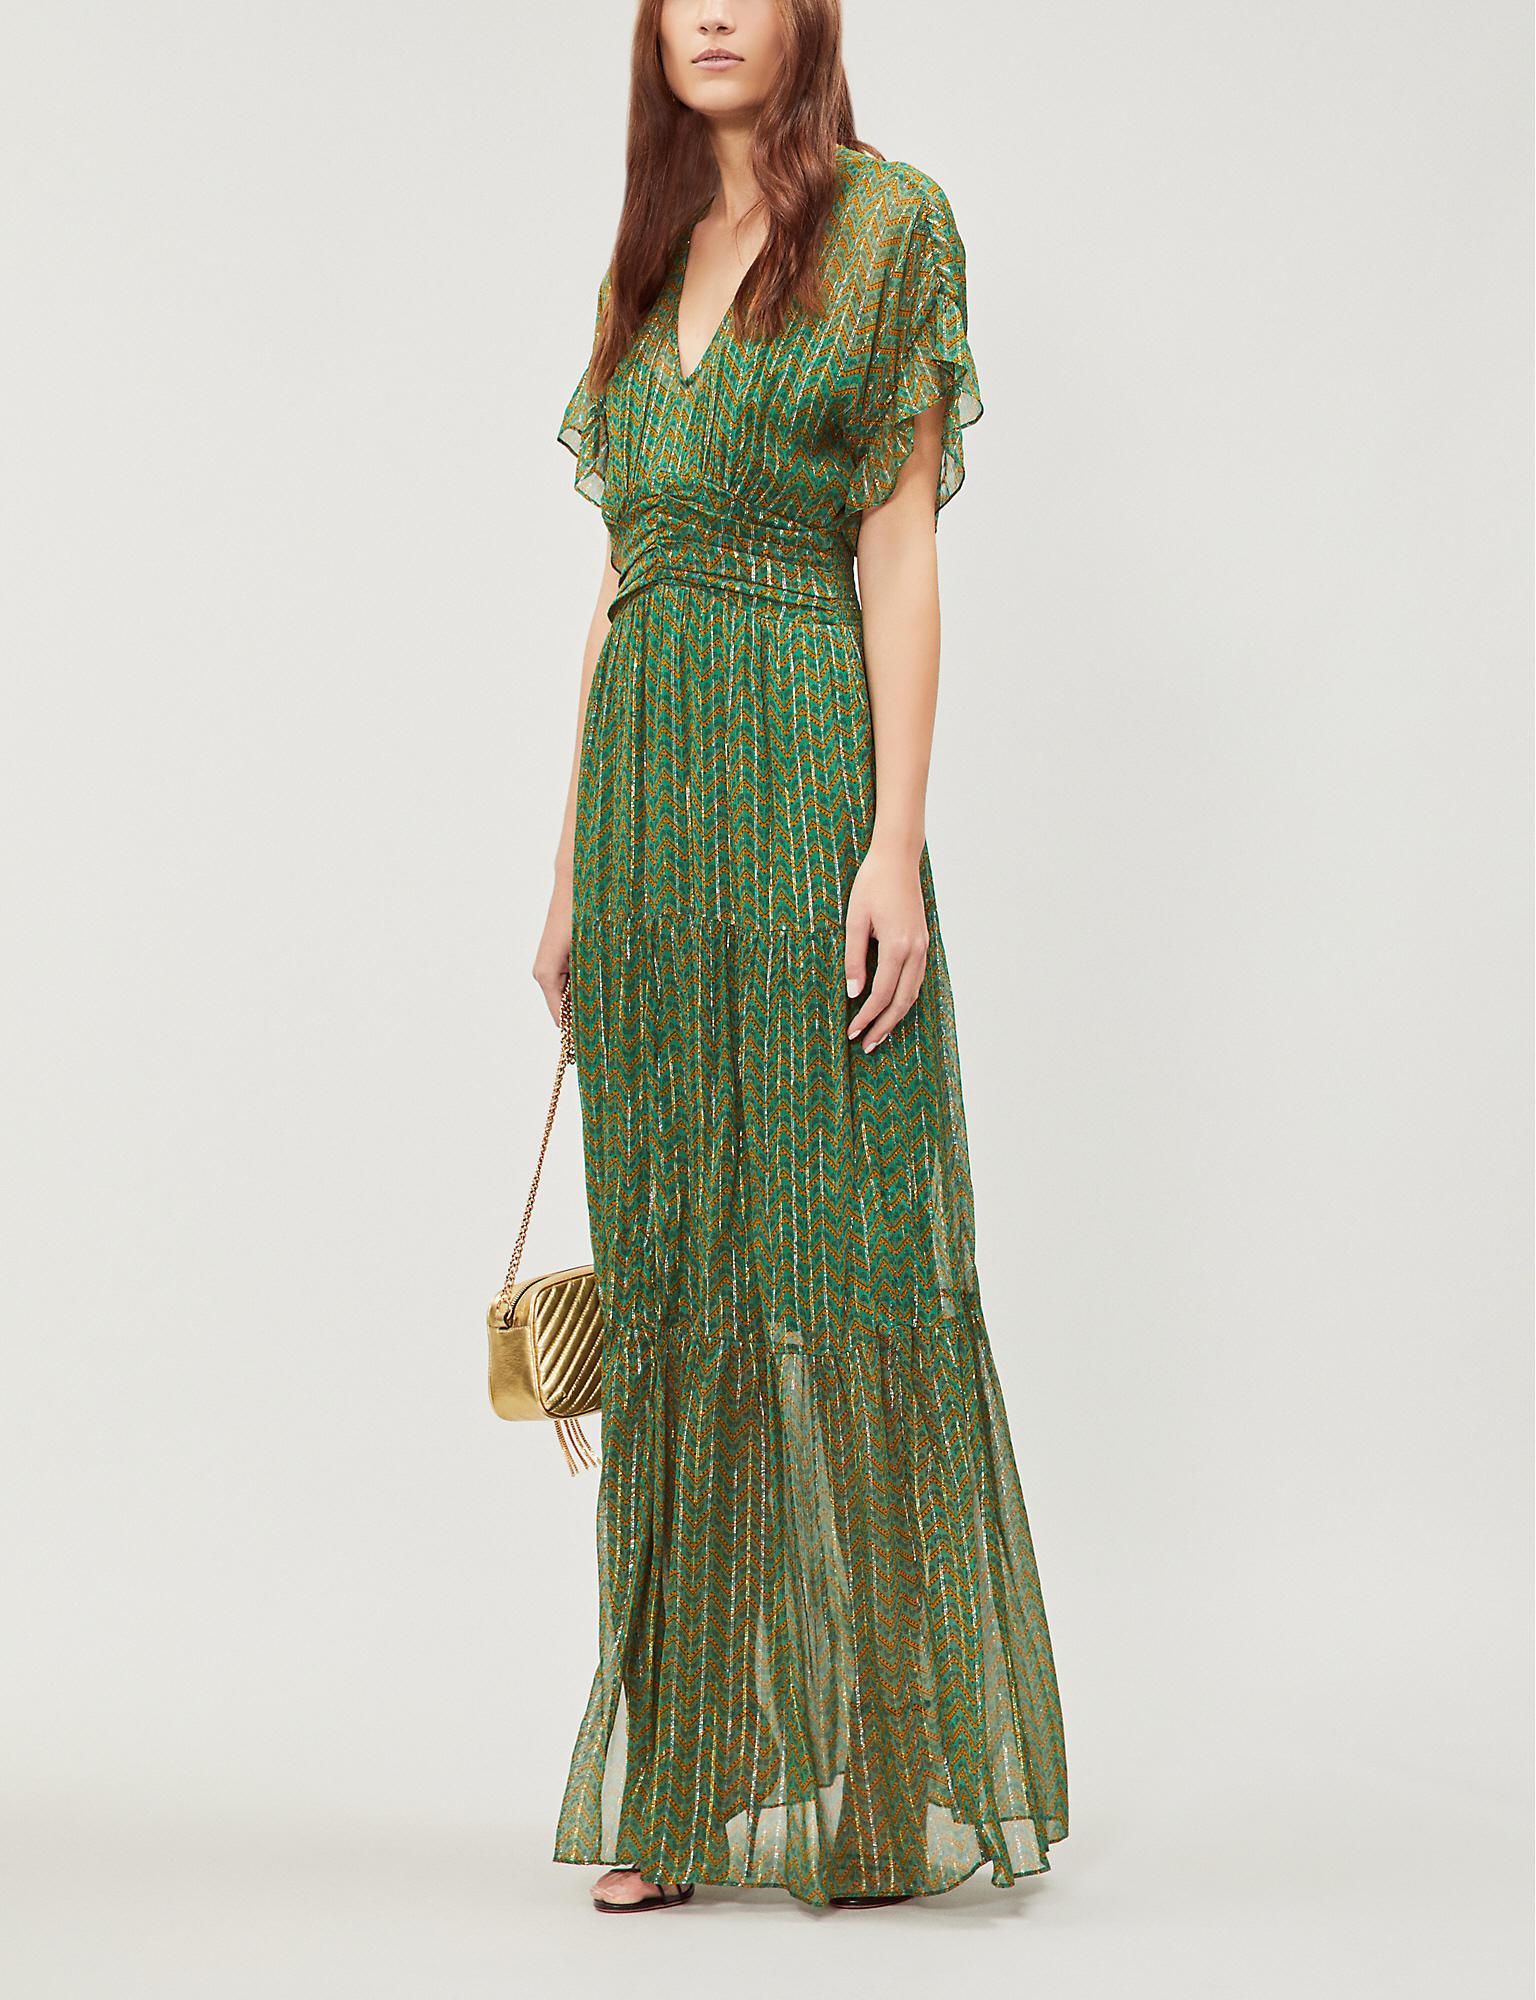 Ba&sh Wanda Metallic Accent Maxi Dress in Green - Lyst